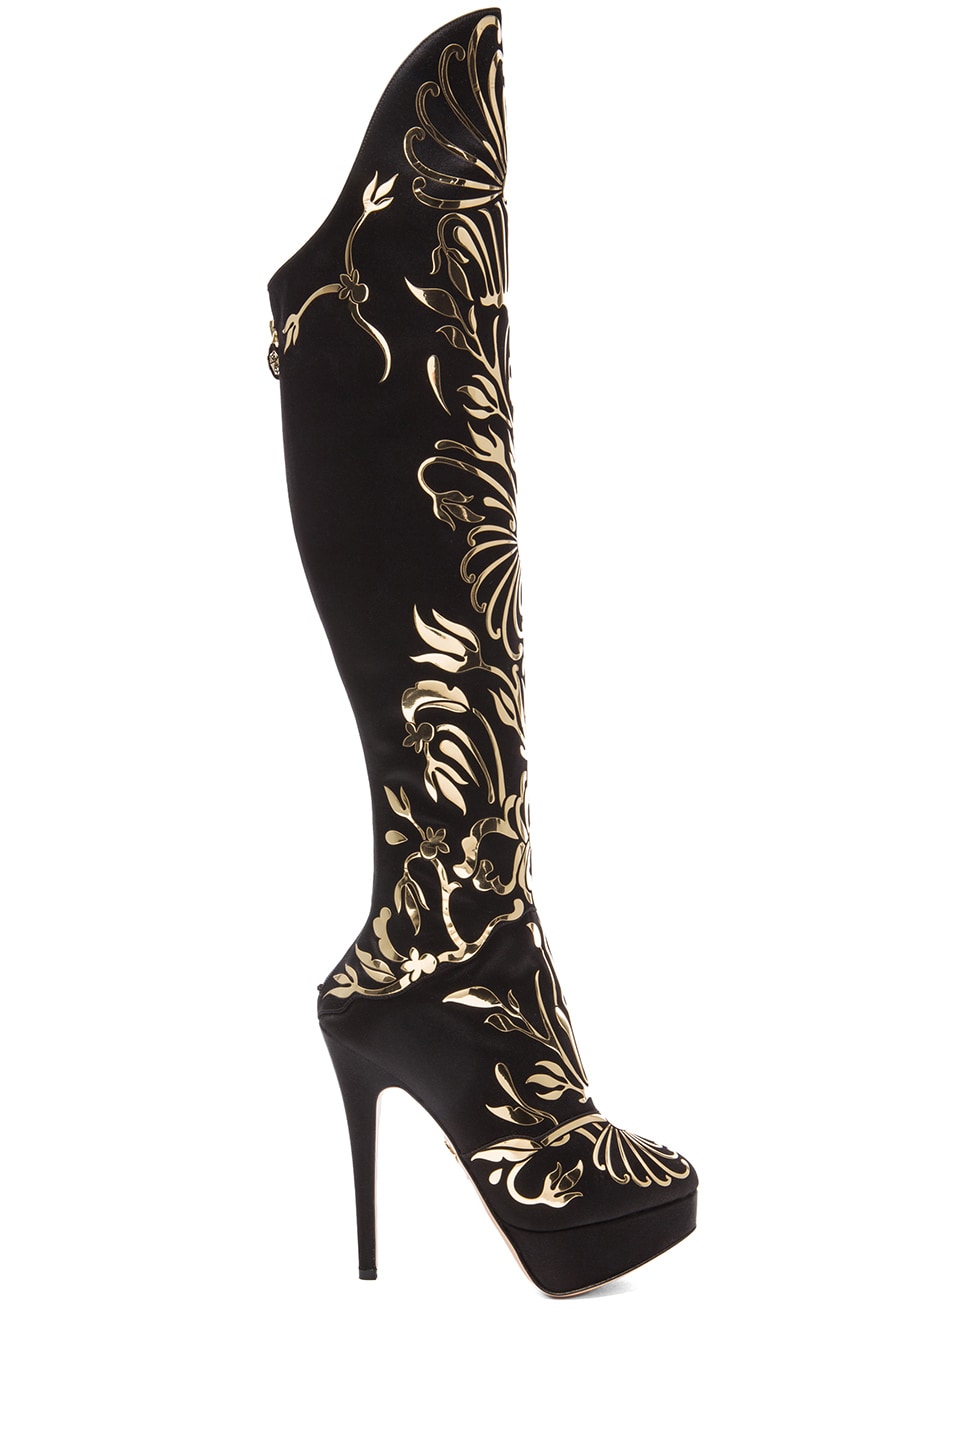 Charlotte Olympia Prosperity Silk Satin Boots in Onyx | FWRD